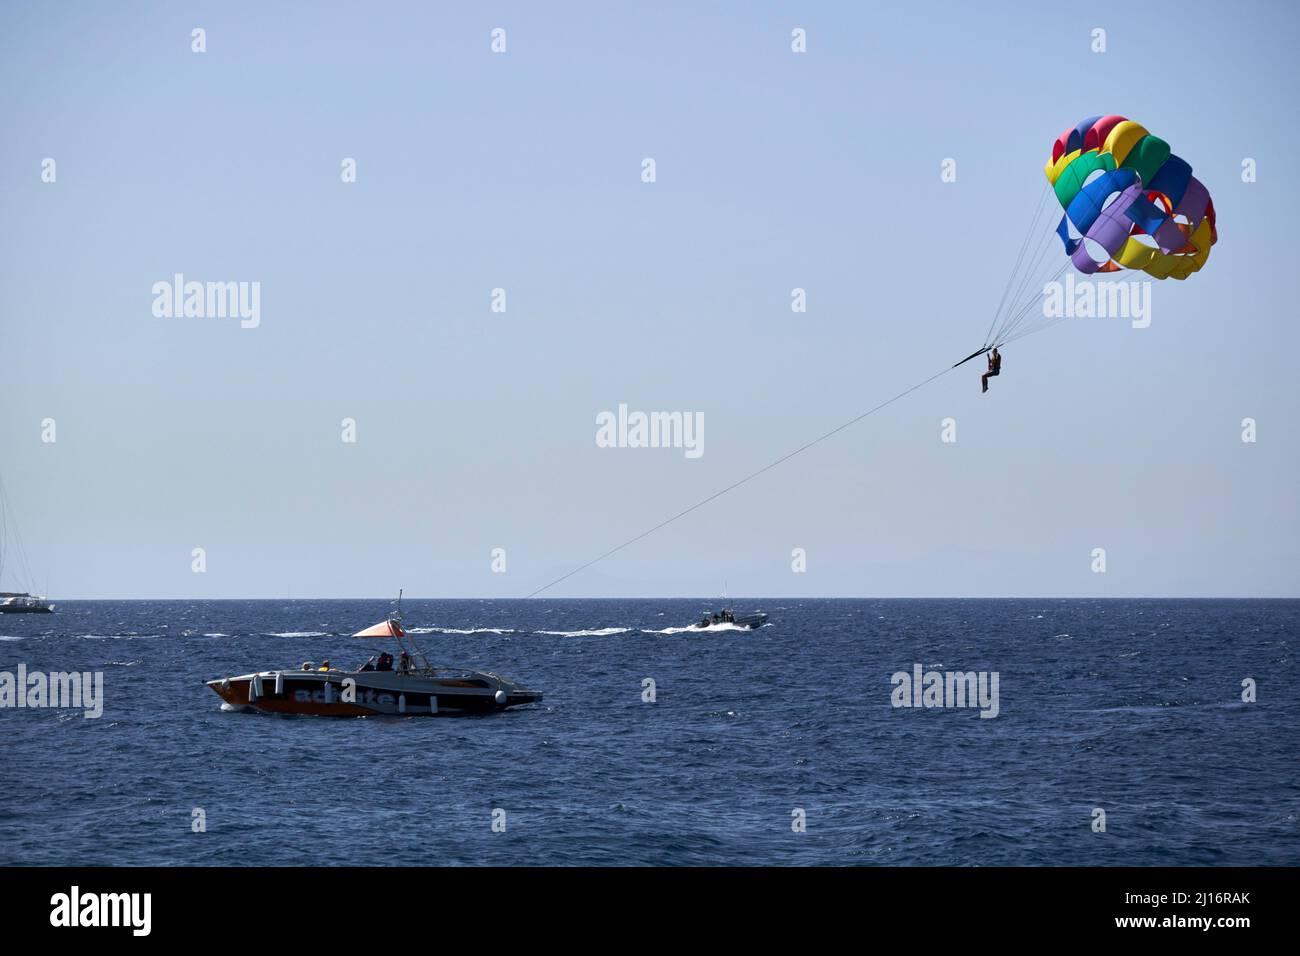 parascending on holiday in puerto del carmen lanzarote canary islands spain Stock Photo